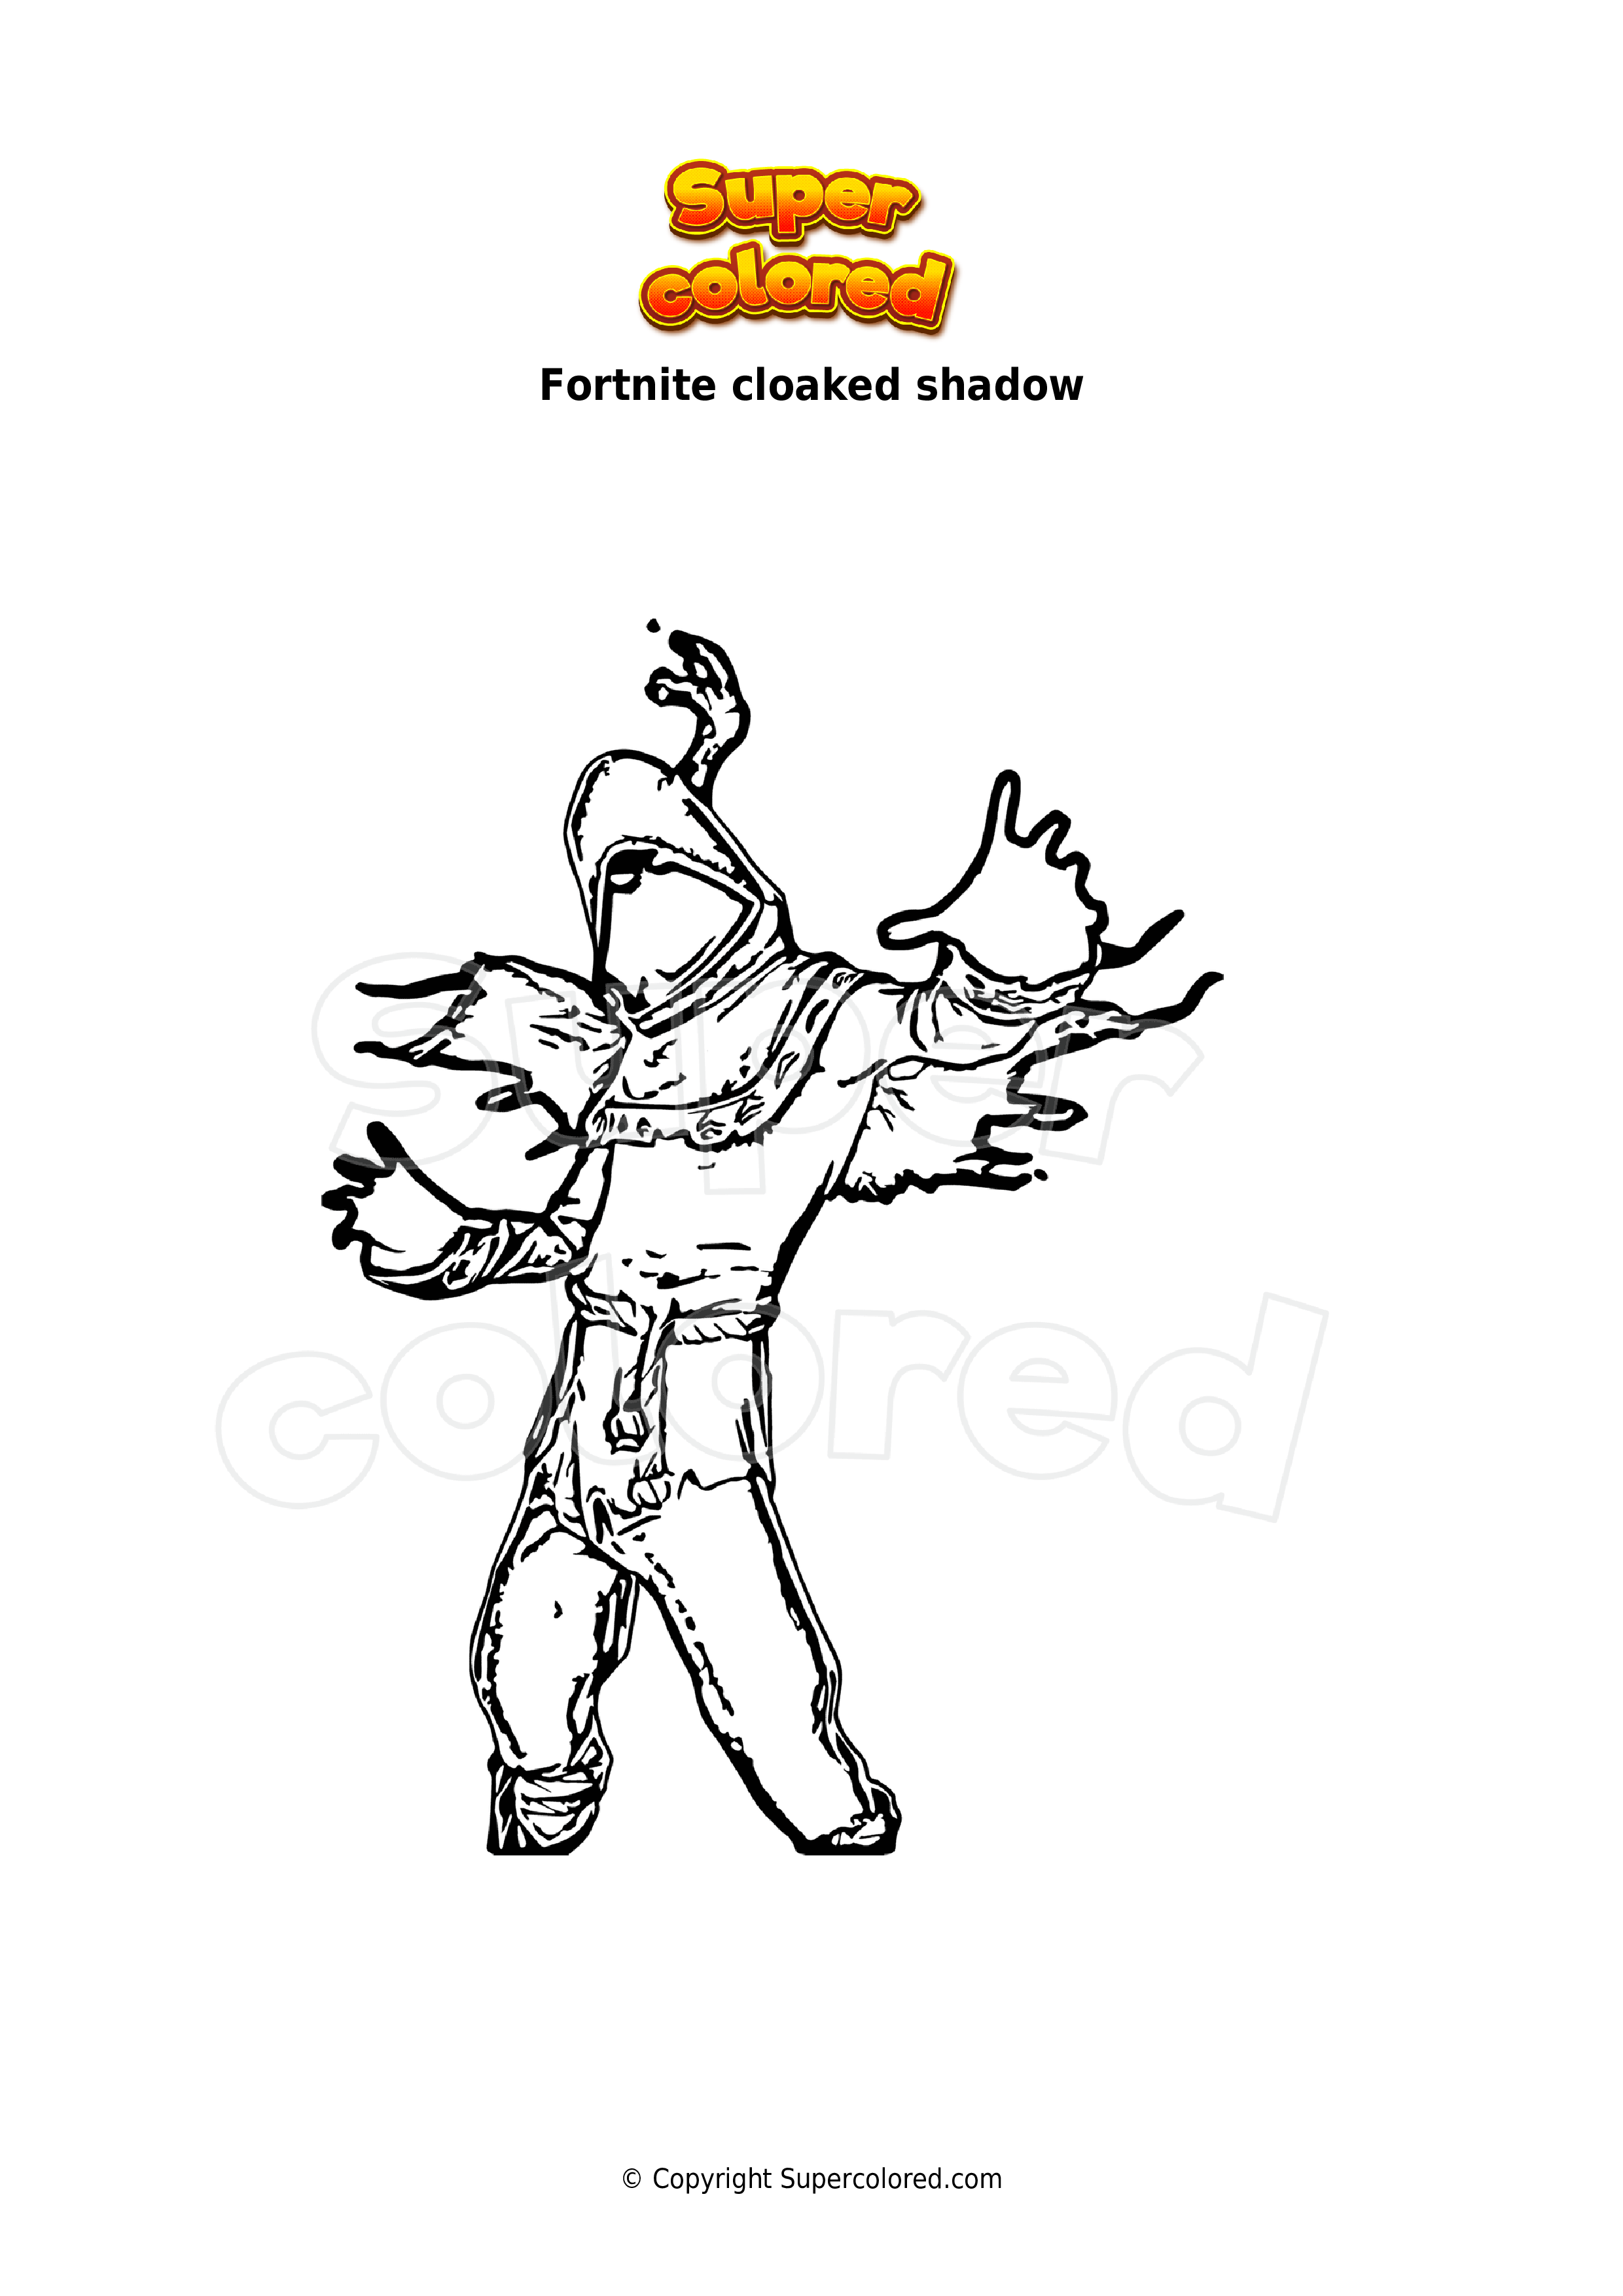 Dibujo para colorear Fortnite cloaked shadow - Supercolored.com